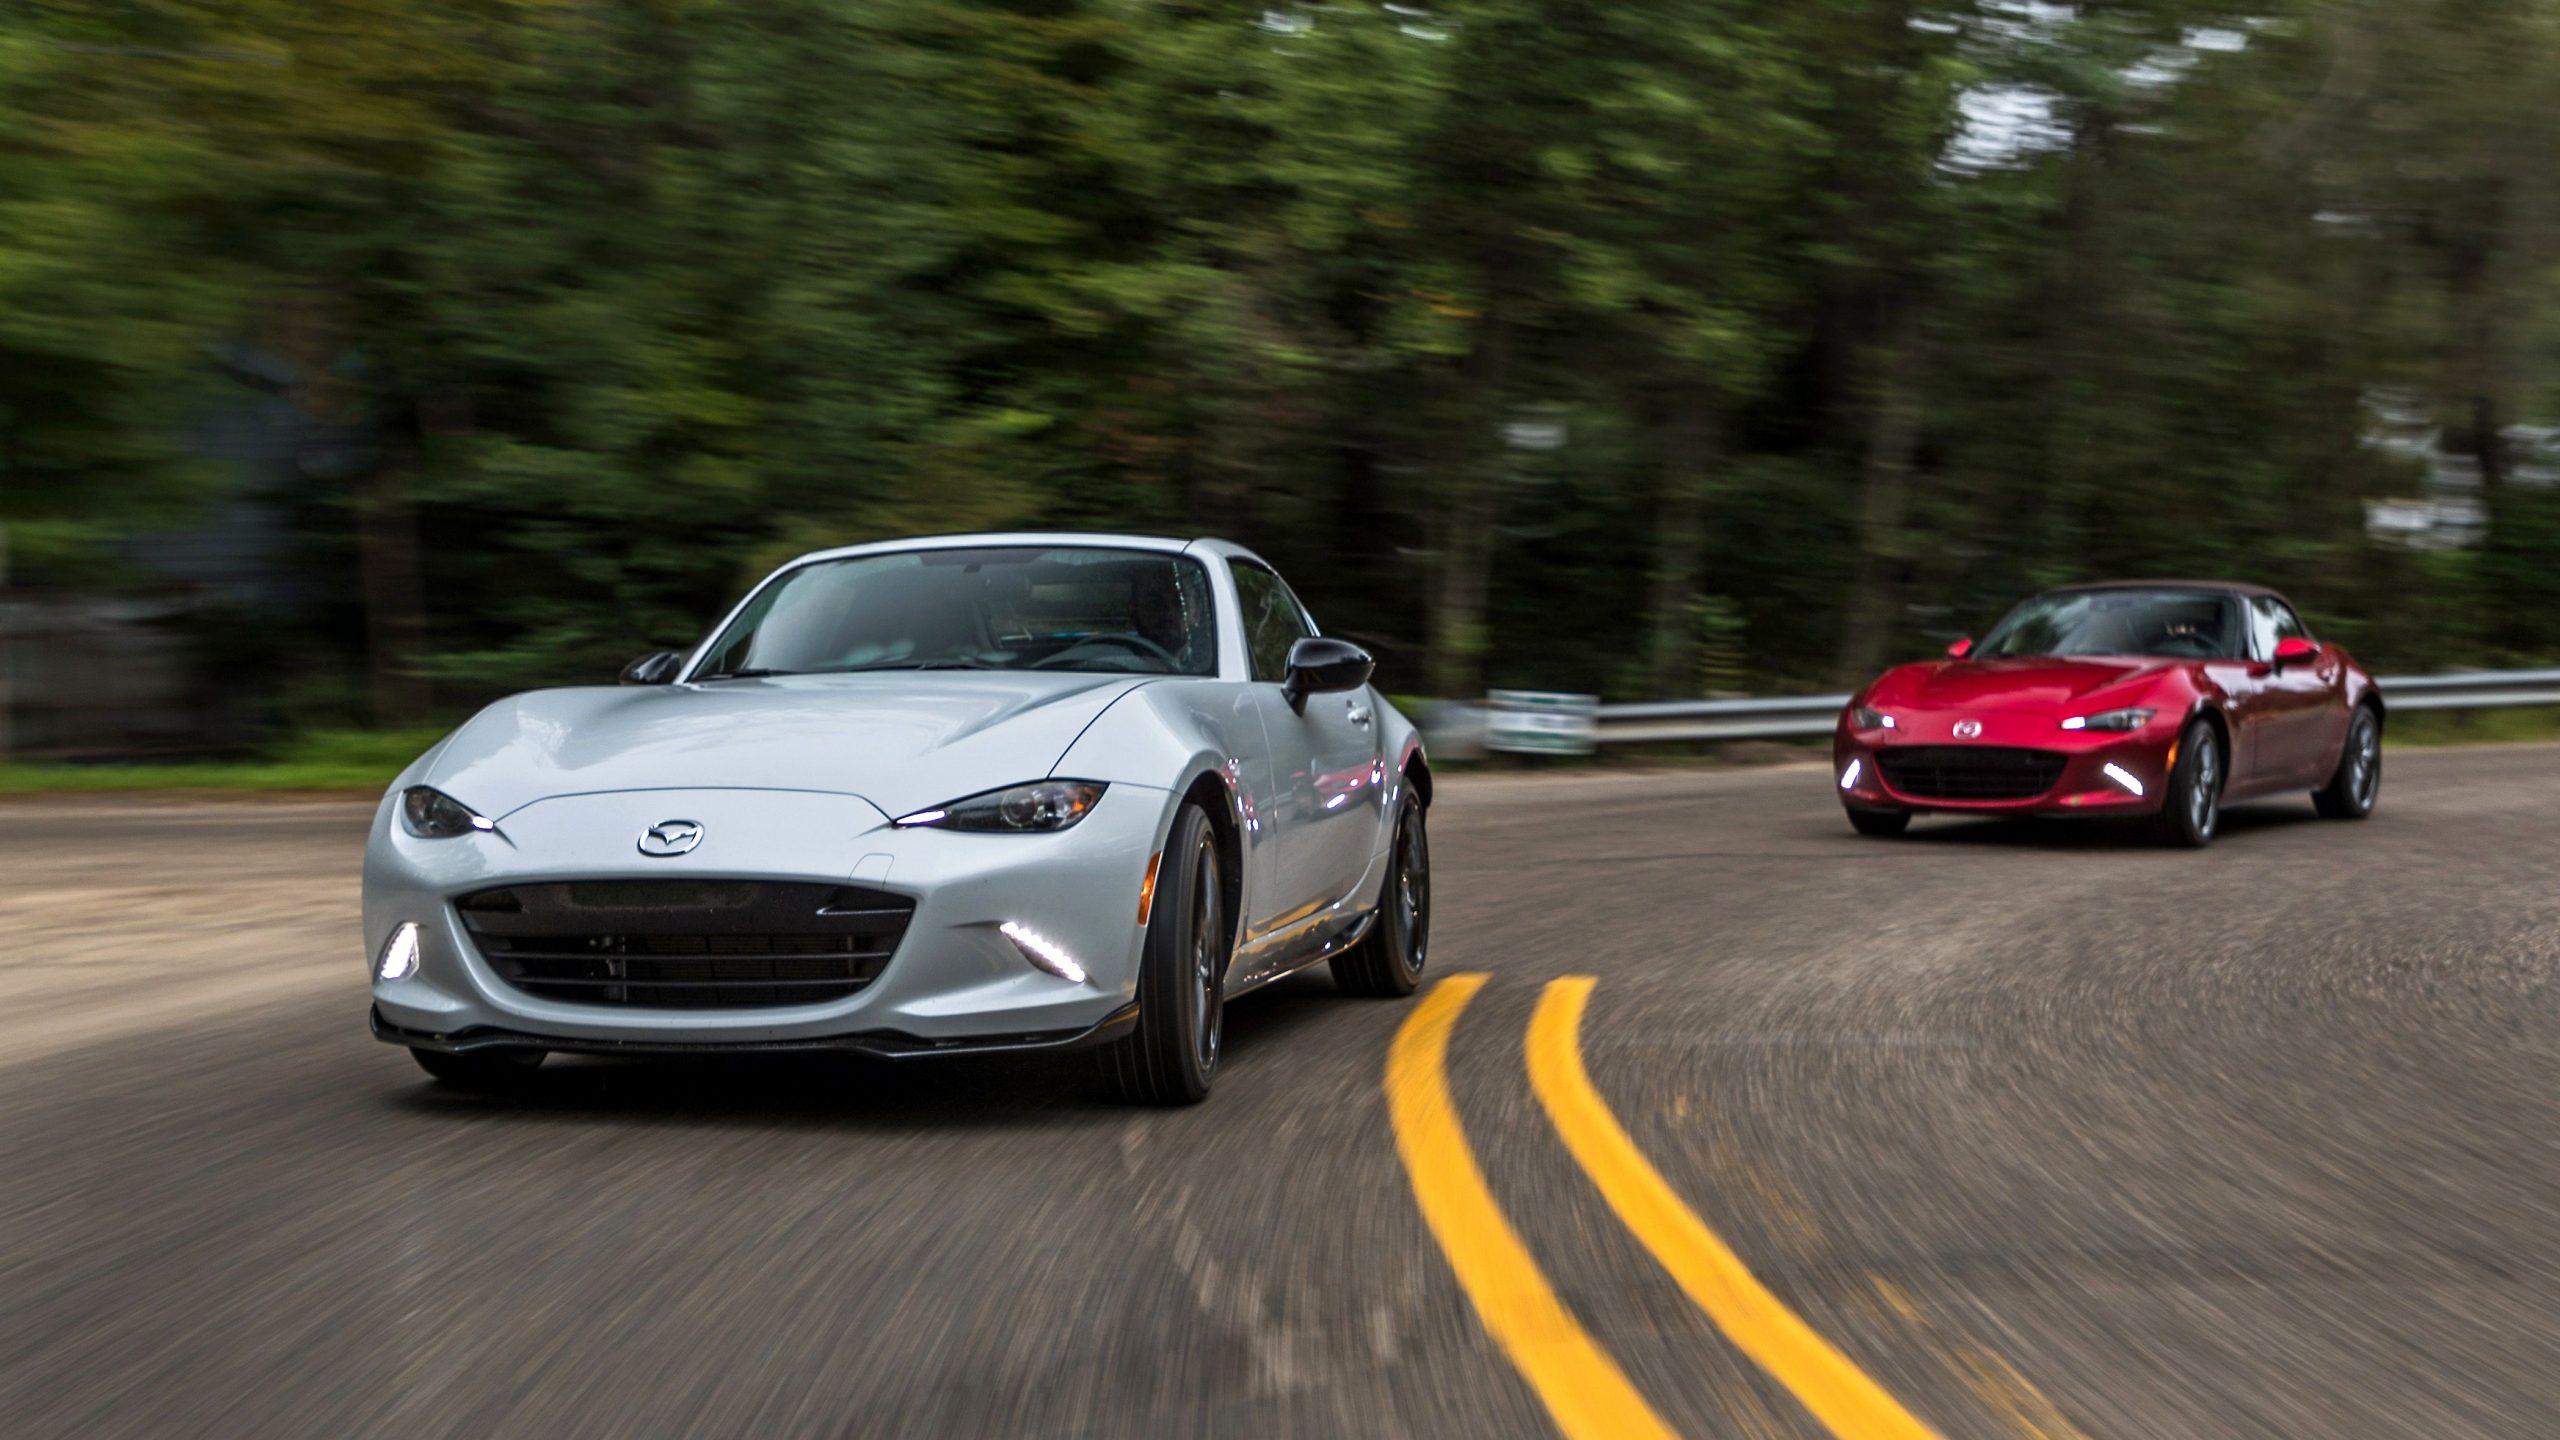 The Next Mazda Miata Will Gain Hybrid Power